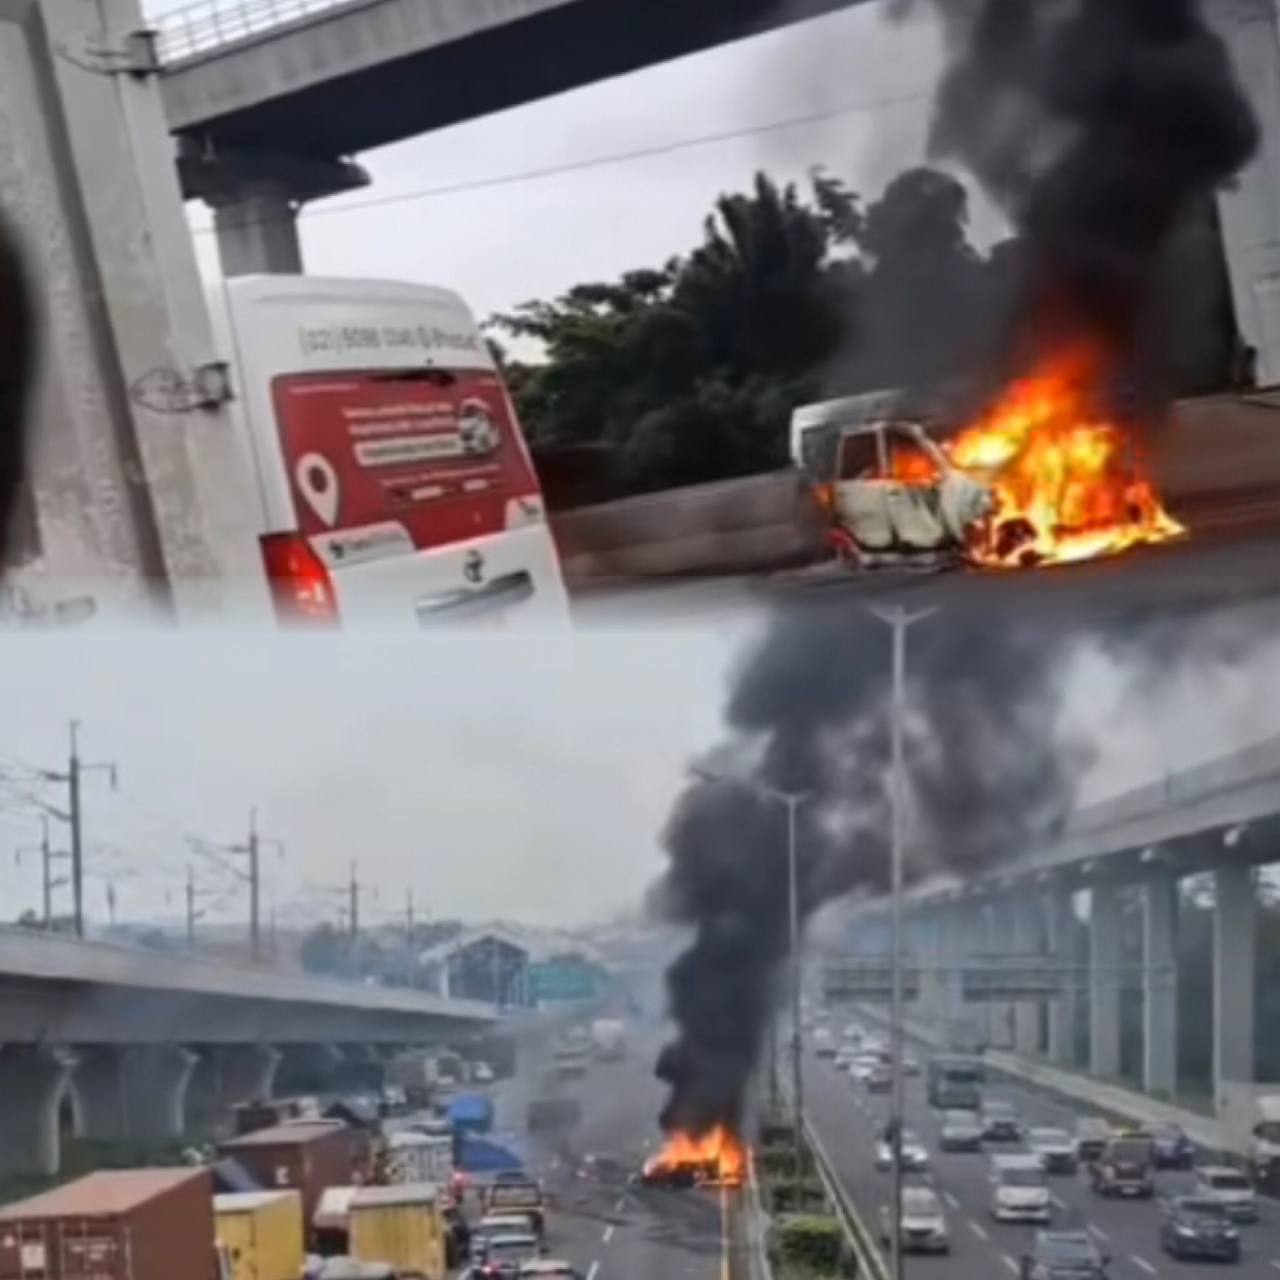 Terlibat Kecelakaan, Mobil Mini Bus dan Pick Up Terbakar di Tol KM 6 Japek